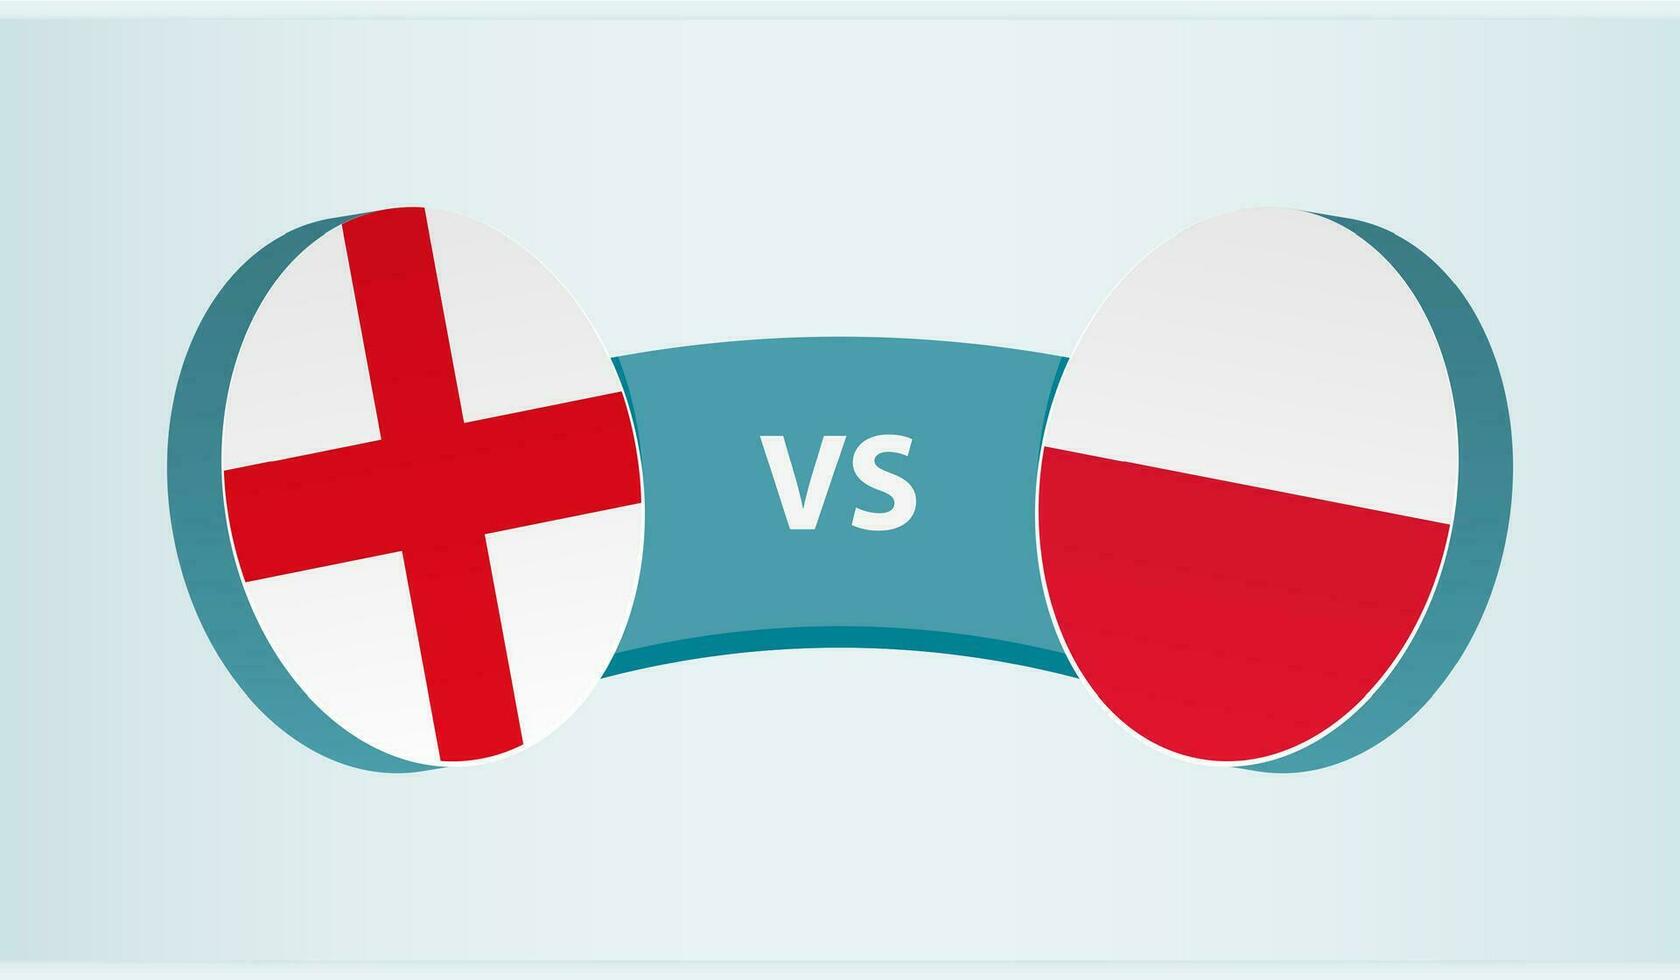 England versus Poland, team sports competition concept. vector